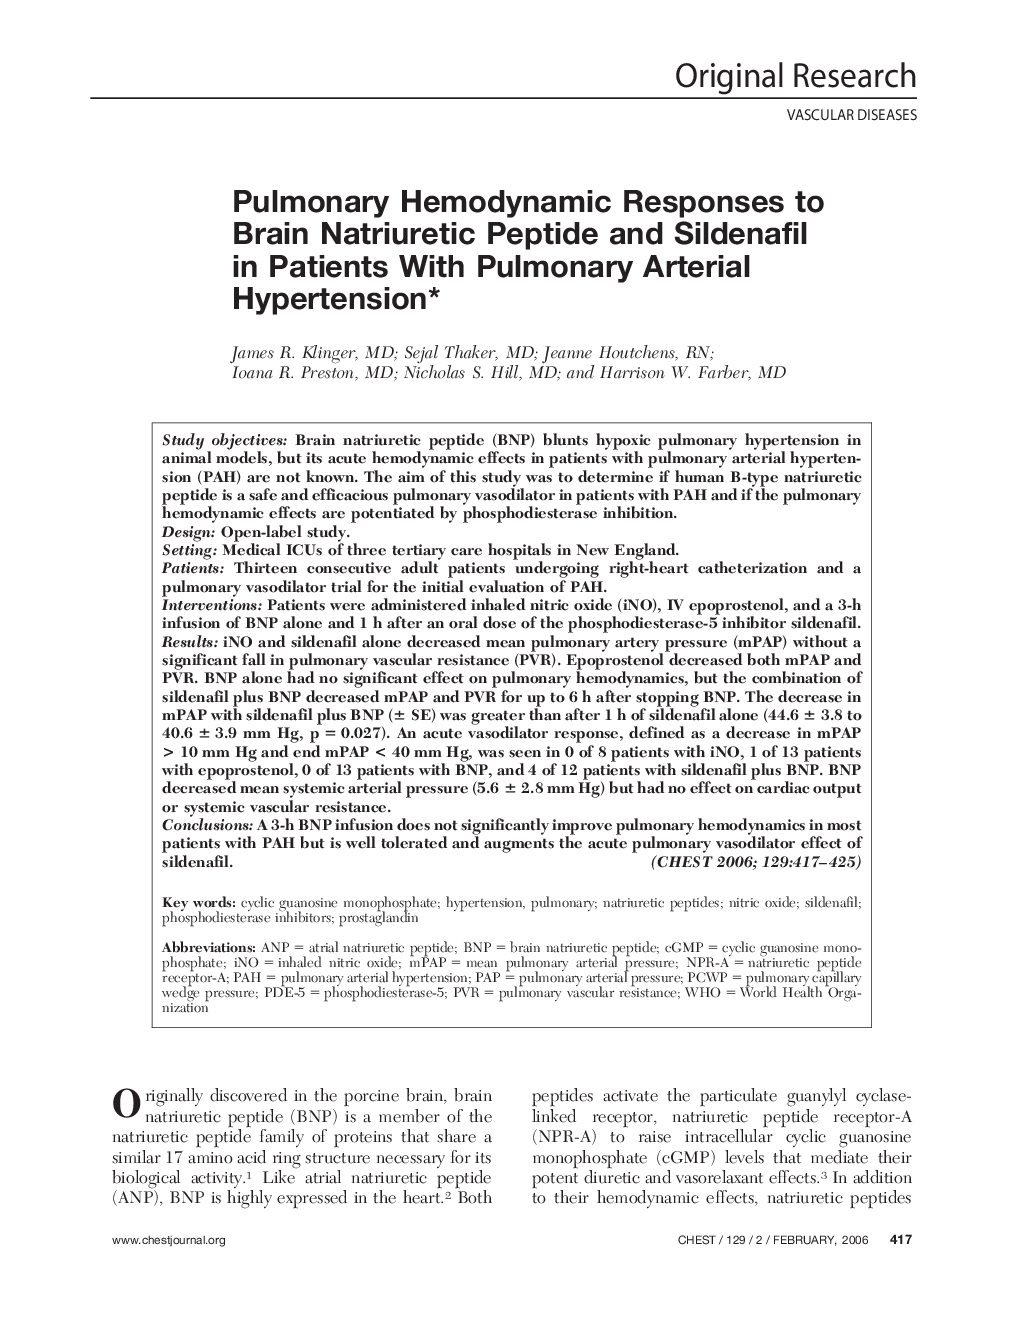 Pulmonary Hemodynamic Responses to Brain Natriuretic Peptide and Sildenafil in Patients With Pulmonary Arterial Hypertension 